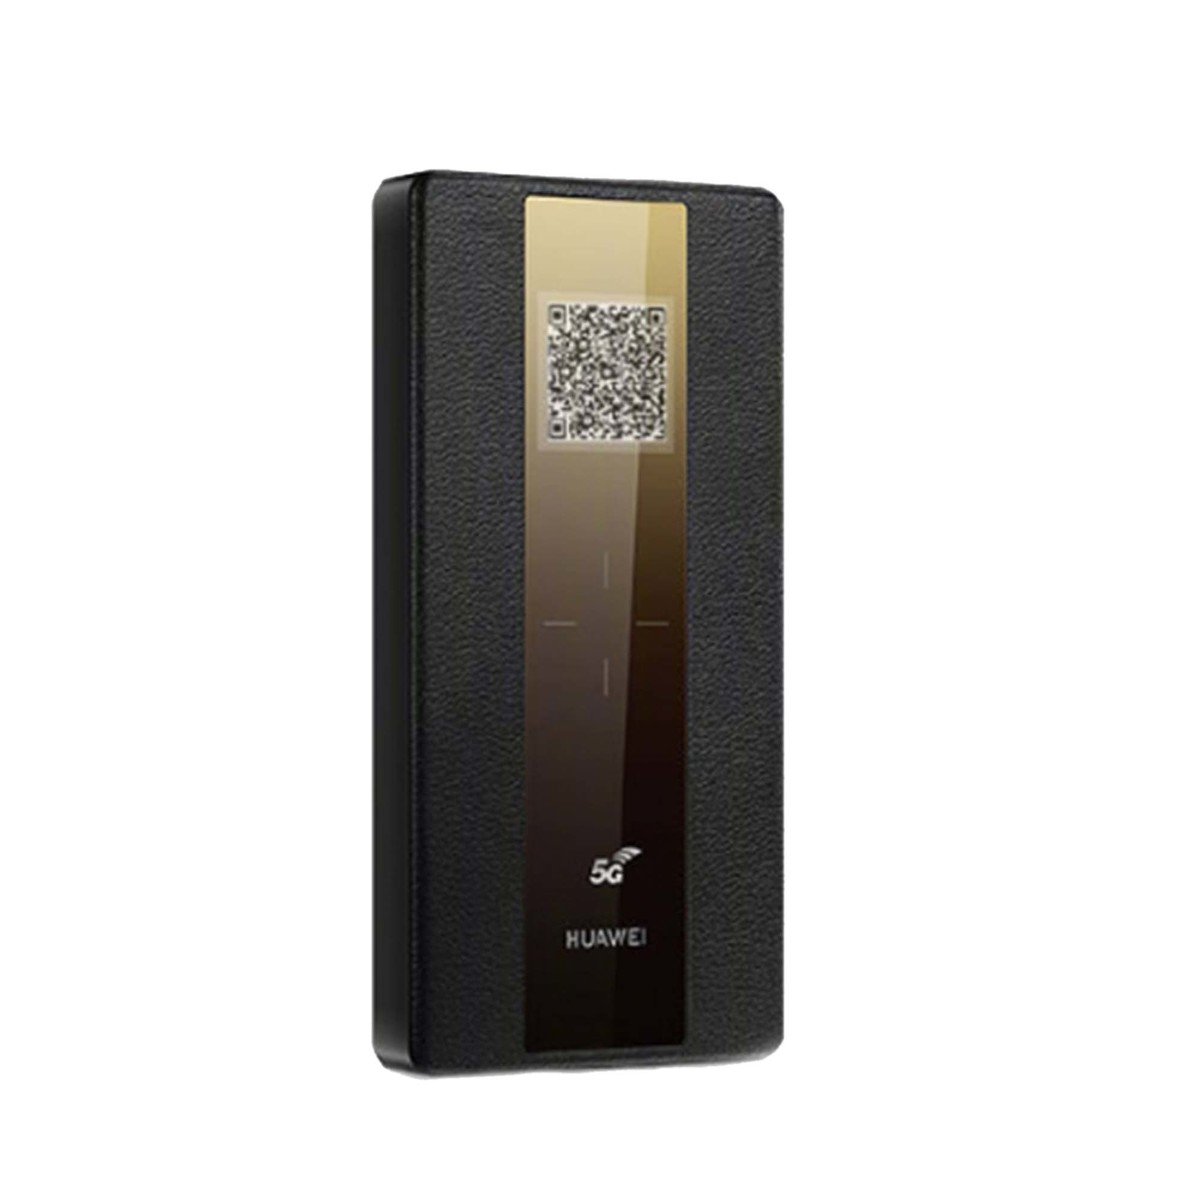 Huawei 5G Portable Router Pro E6878-370,Black